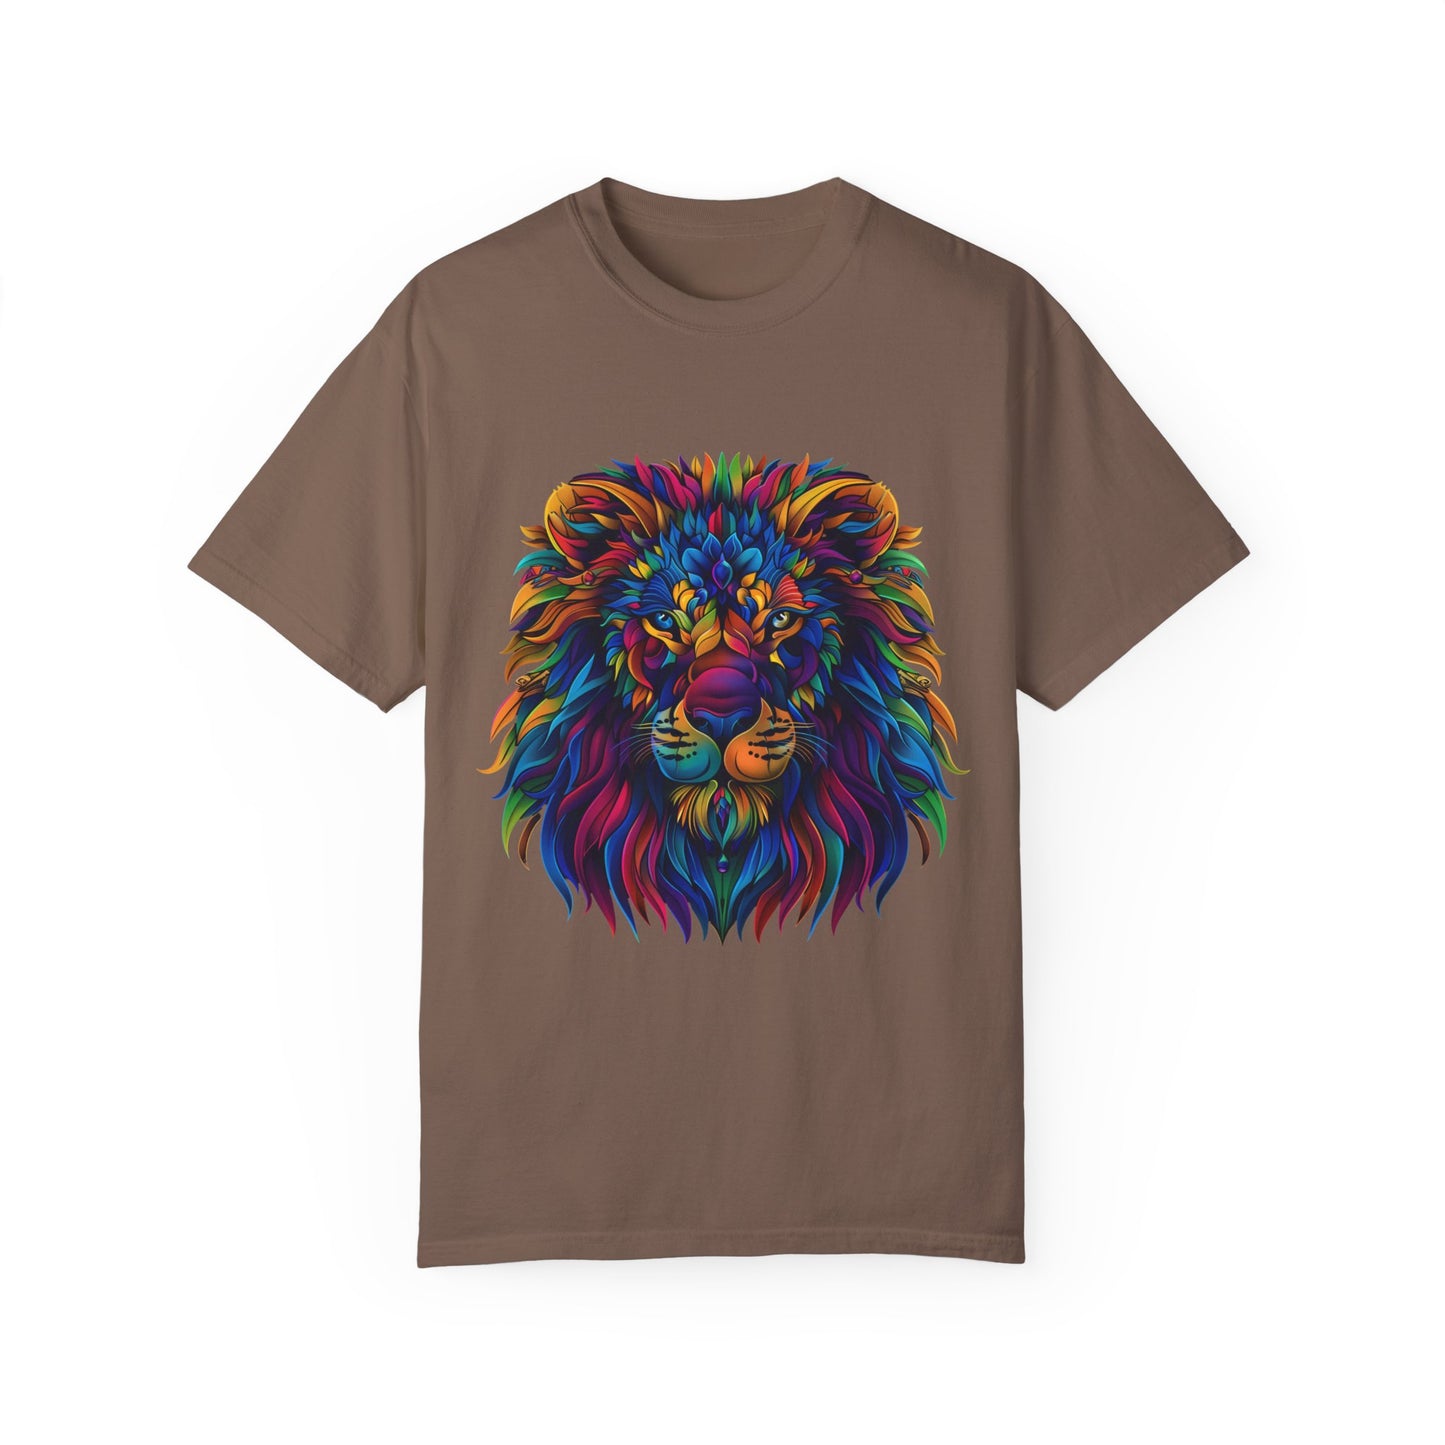 Lion Head Cool Graphic Design Novelty Unisex Garment-dyed T-shirt Cotton Funny Humorous Graphic Soft Premium Unisex Men Women Espresso T-shirt Birthday Gift-15